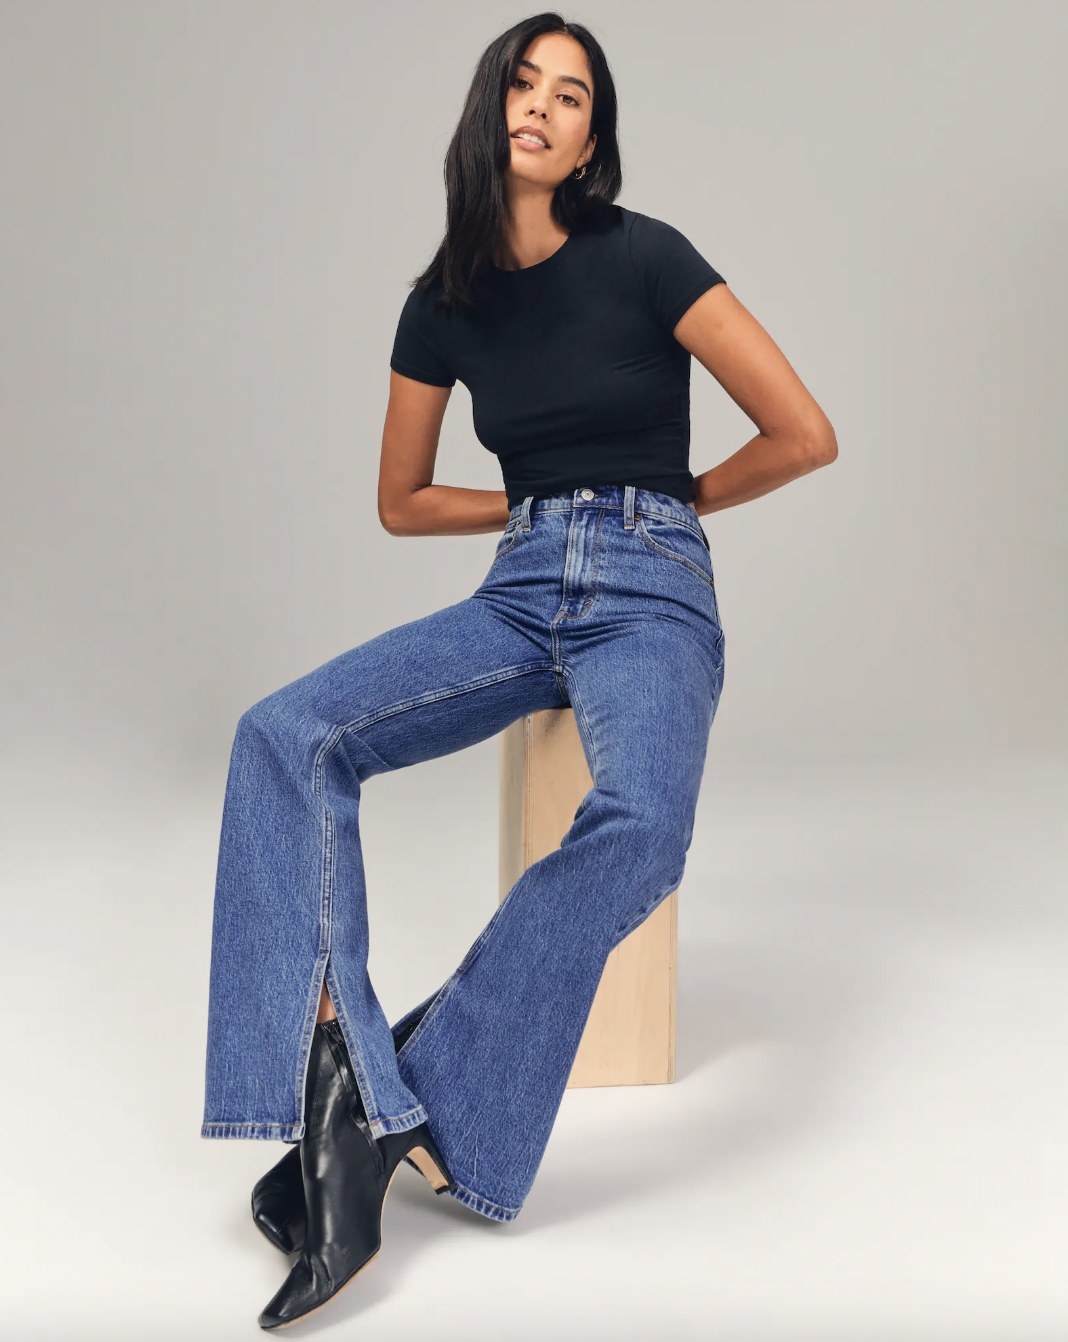 model wearing the jeans